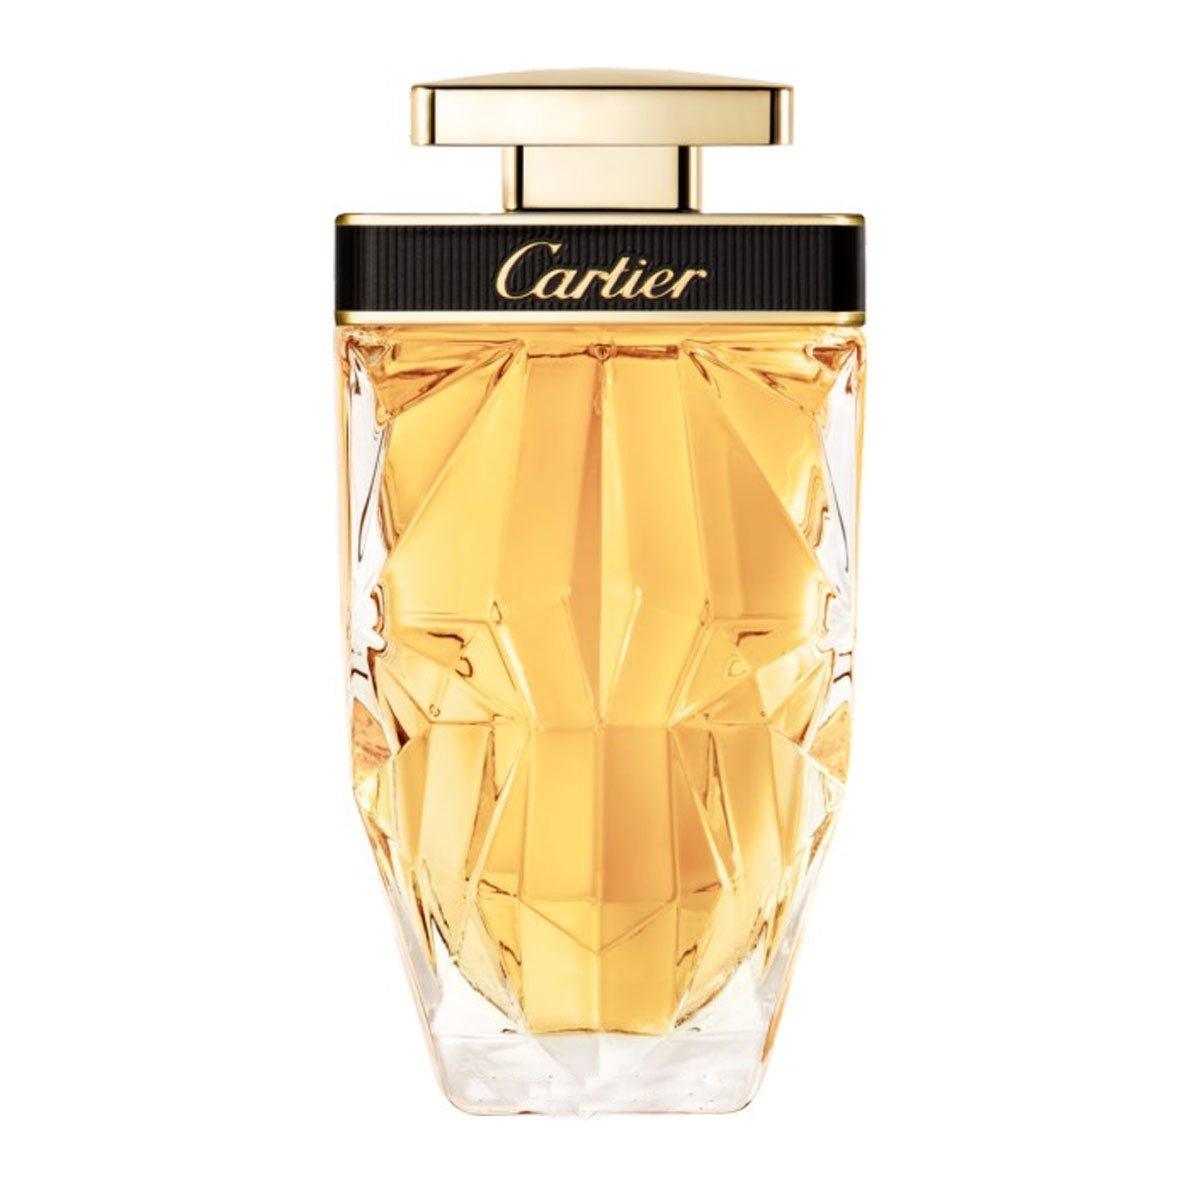 Cartier La Panthere For Women Perfume Edp 75ml-Perfume - AllurebeautypkCartier La Panthere For Women Perfume Edp 75ml-Perfume